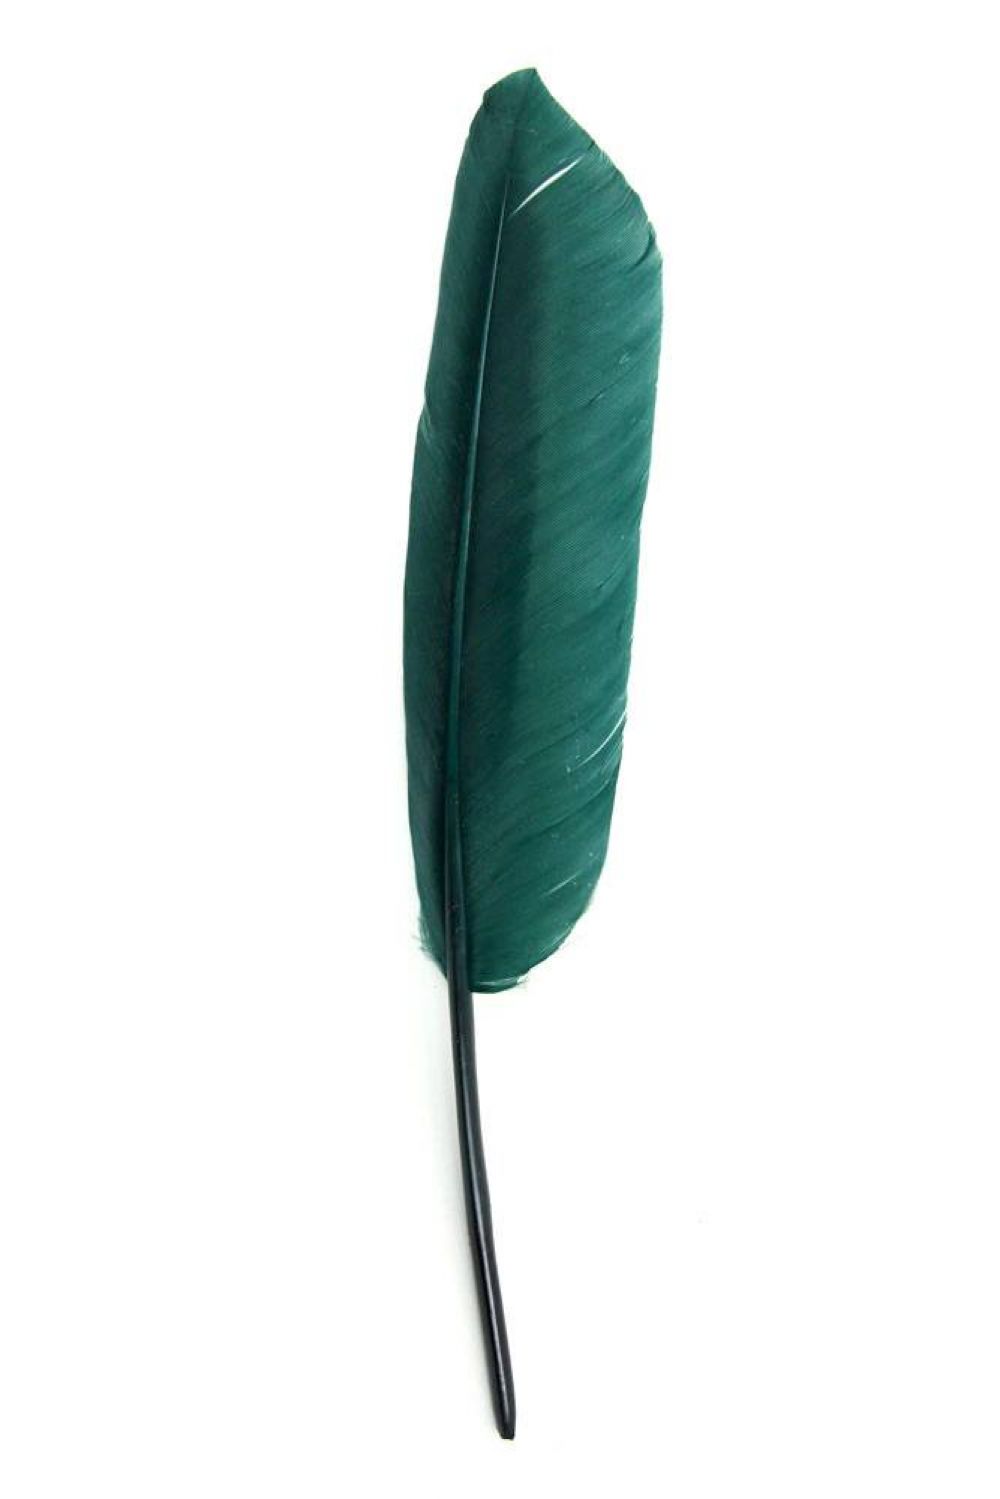 Goose Pointers 22-27cm, dark green, Pack of 10